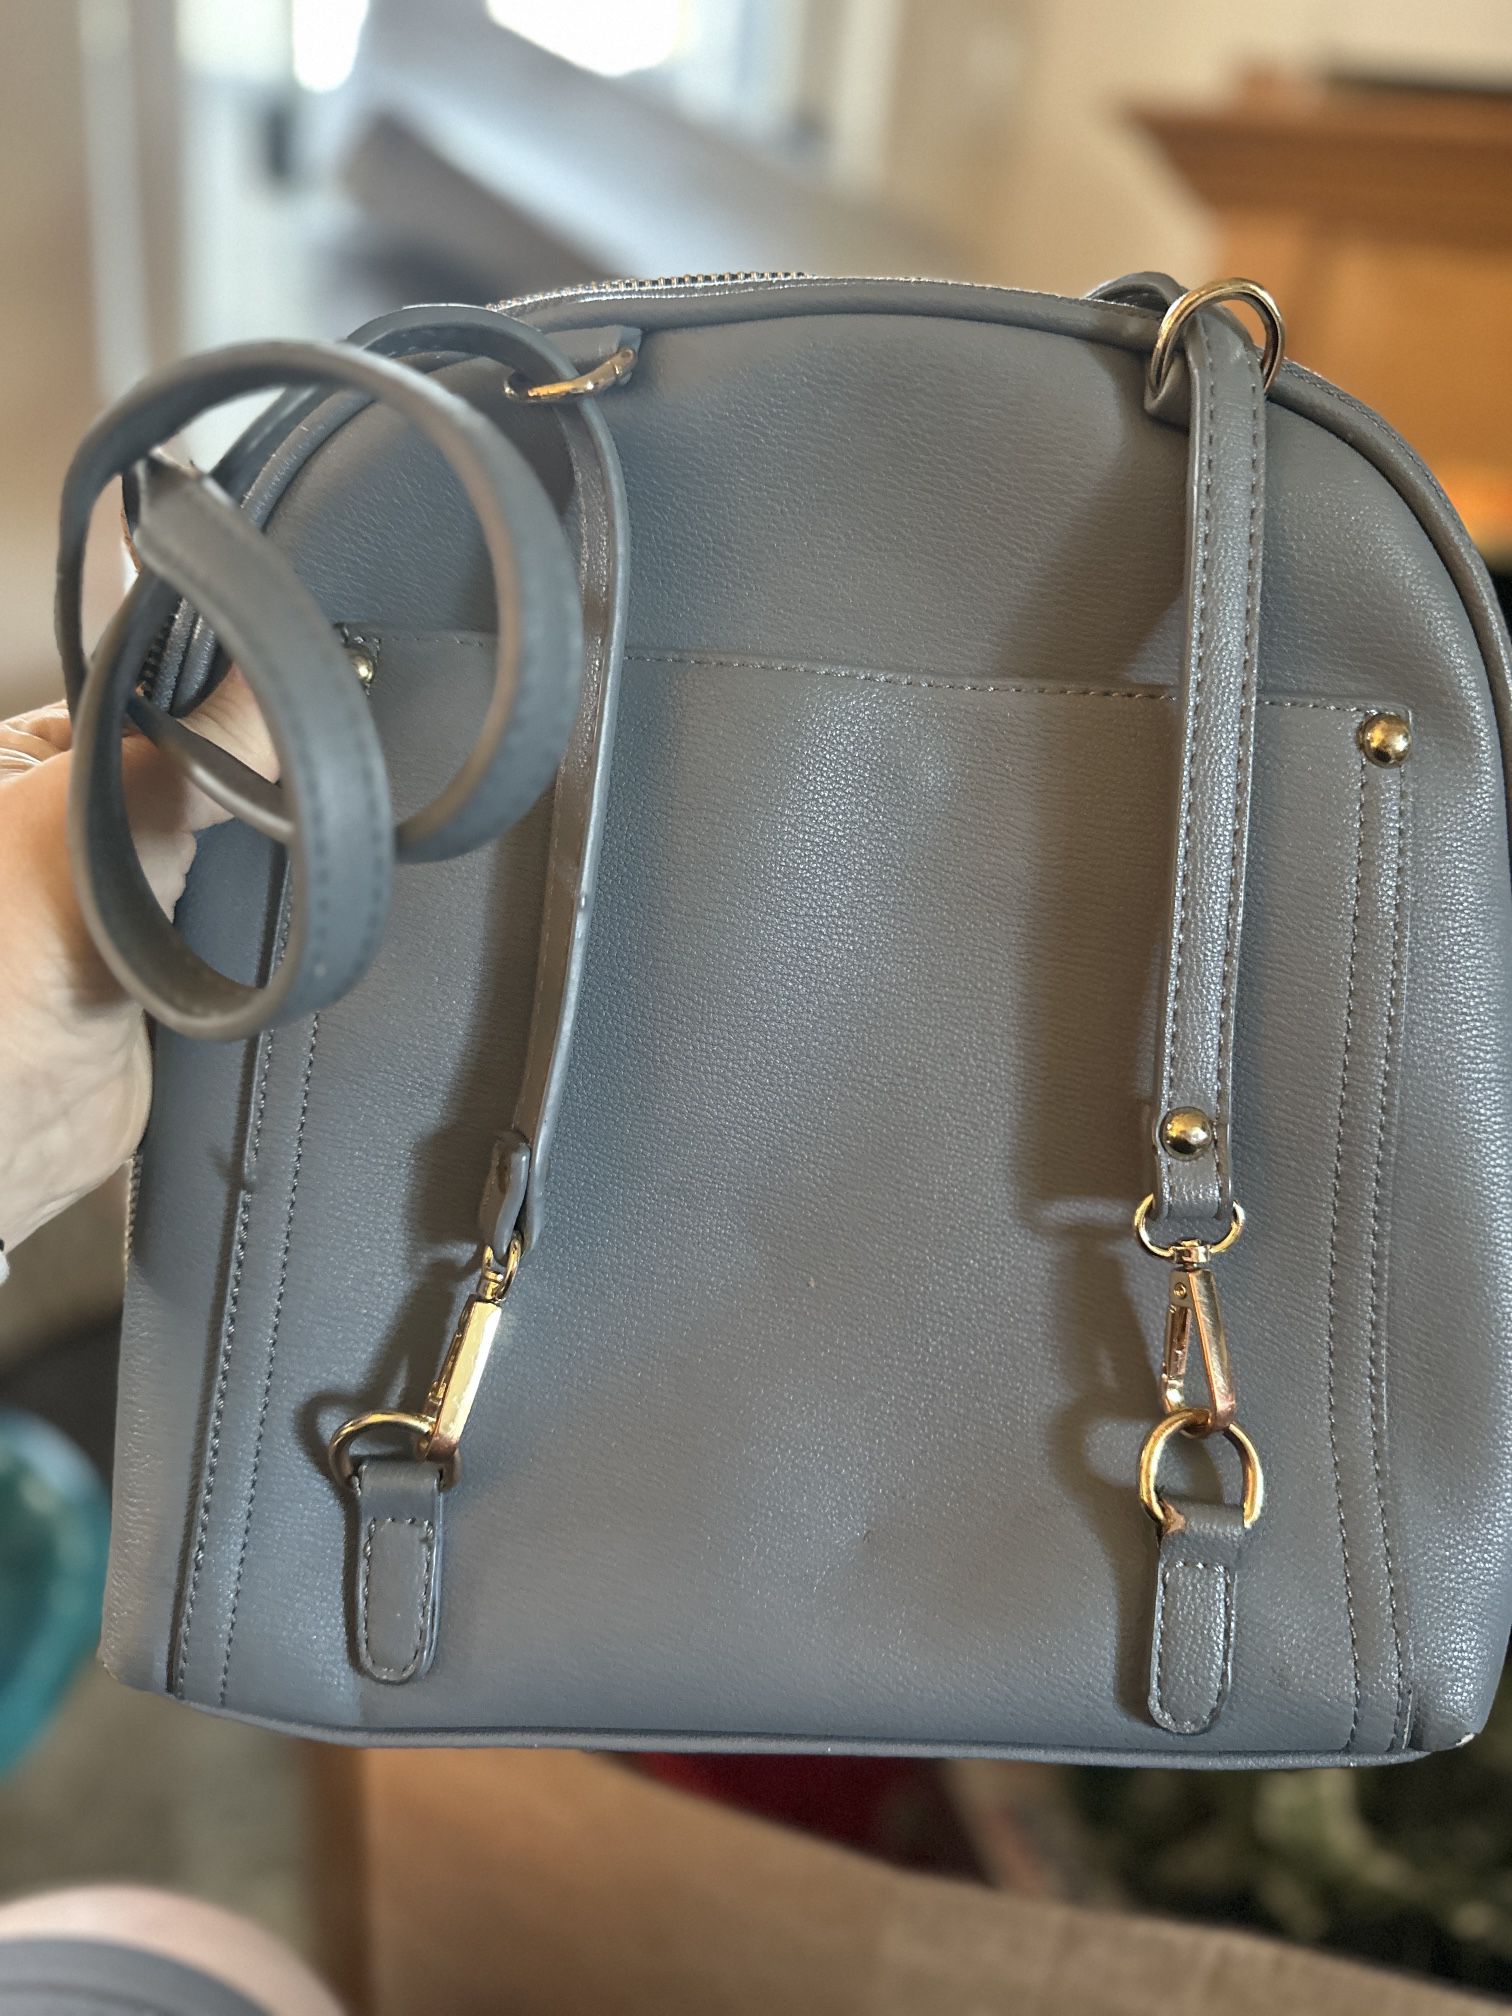 Miztique Vegan Leather Shoulder Satchel Handbag Purse - Gray